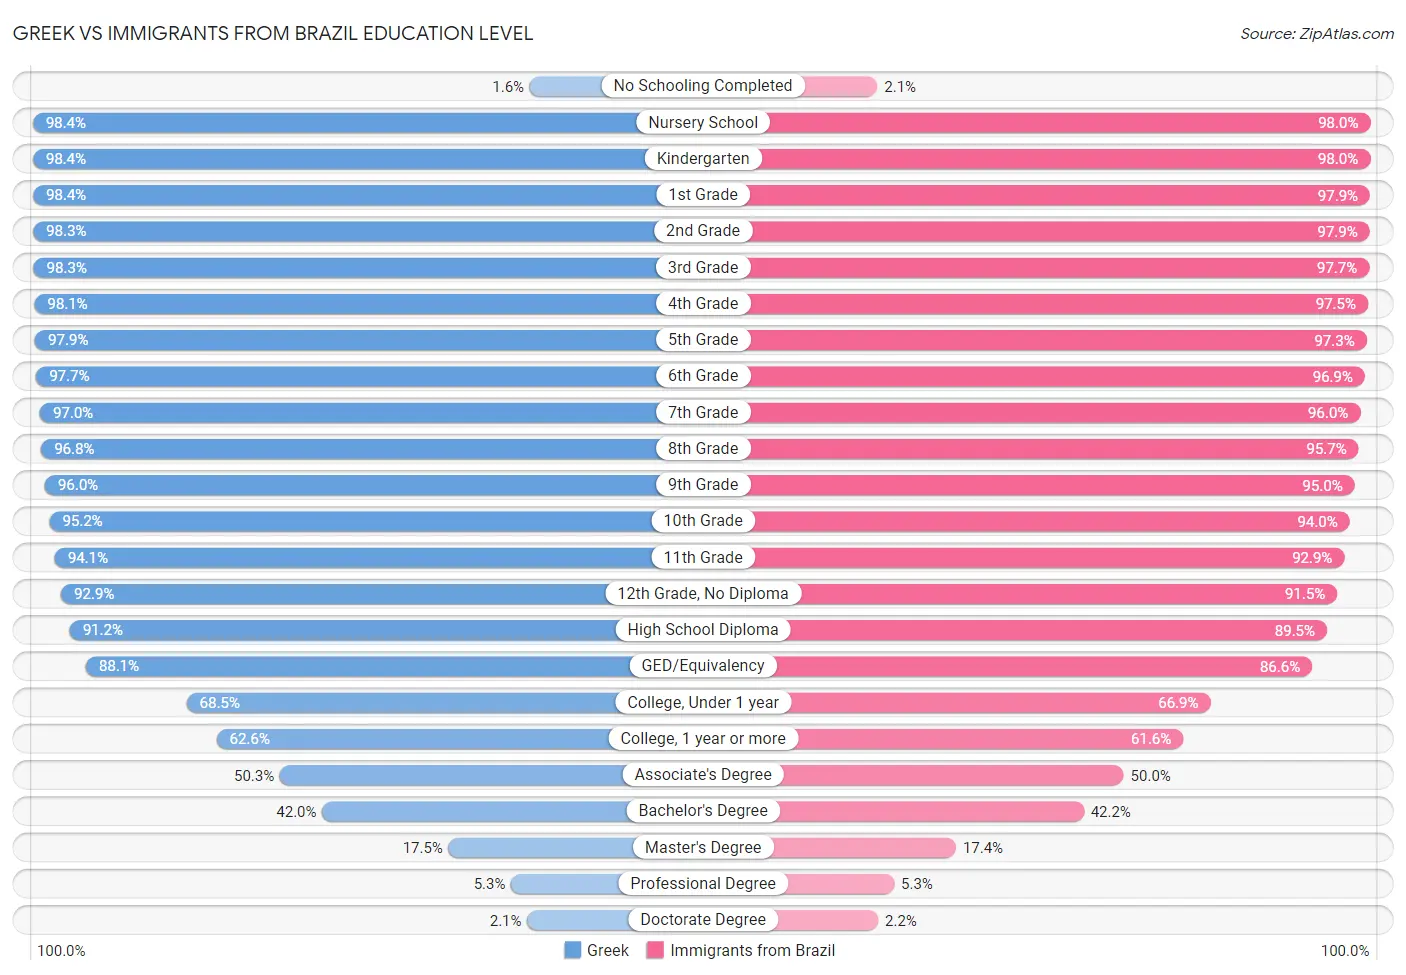 Greek vs Immigrants from Brazil Education Level